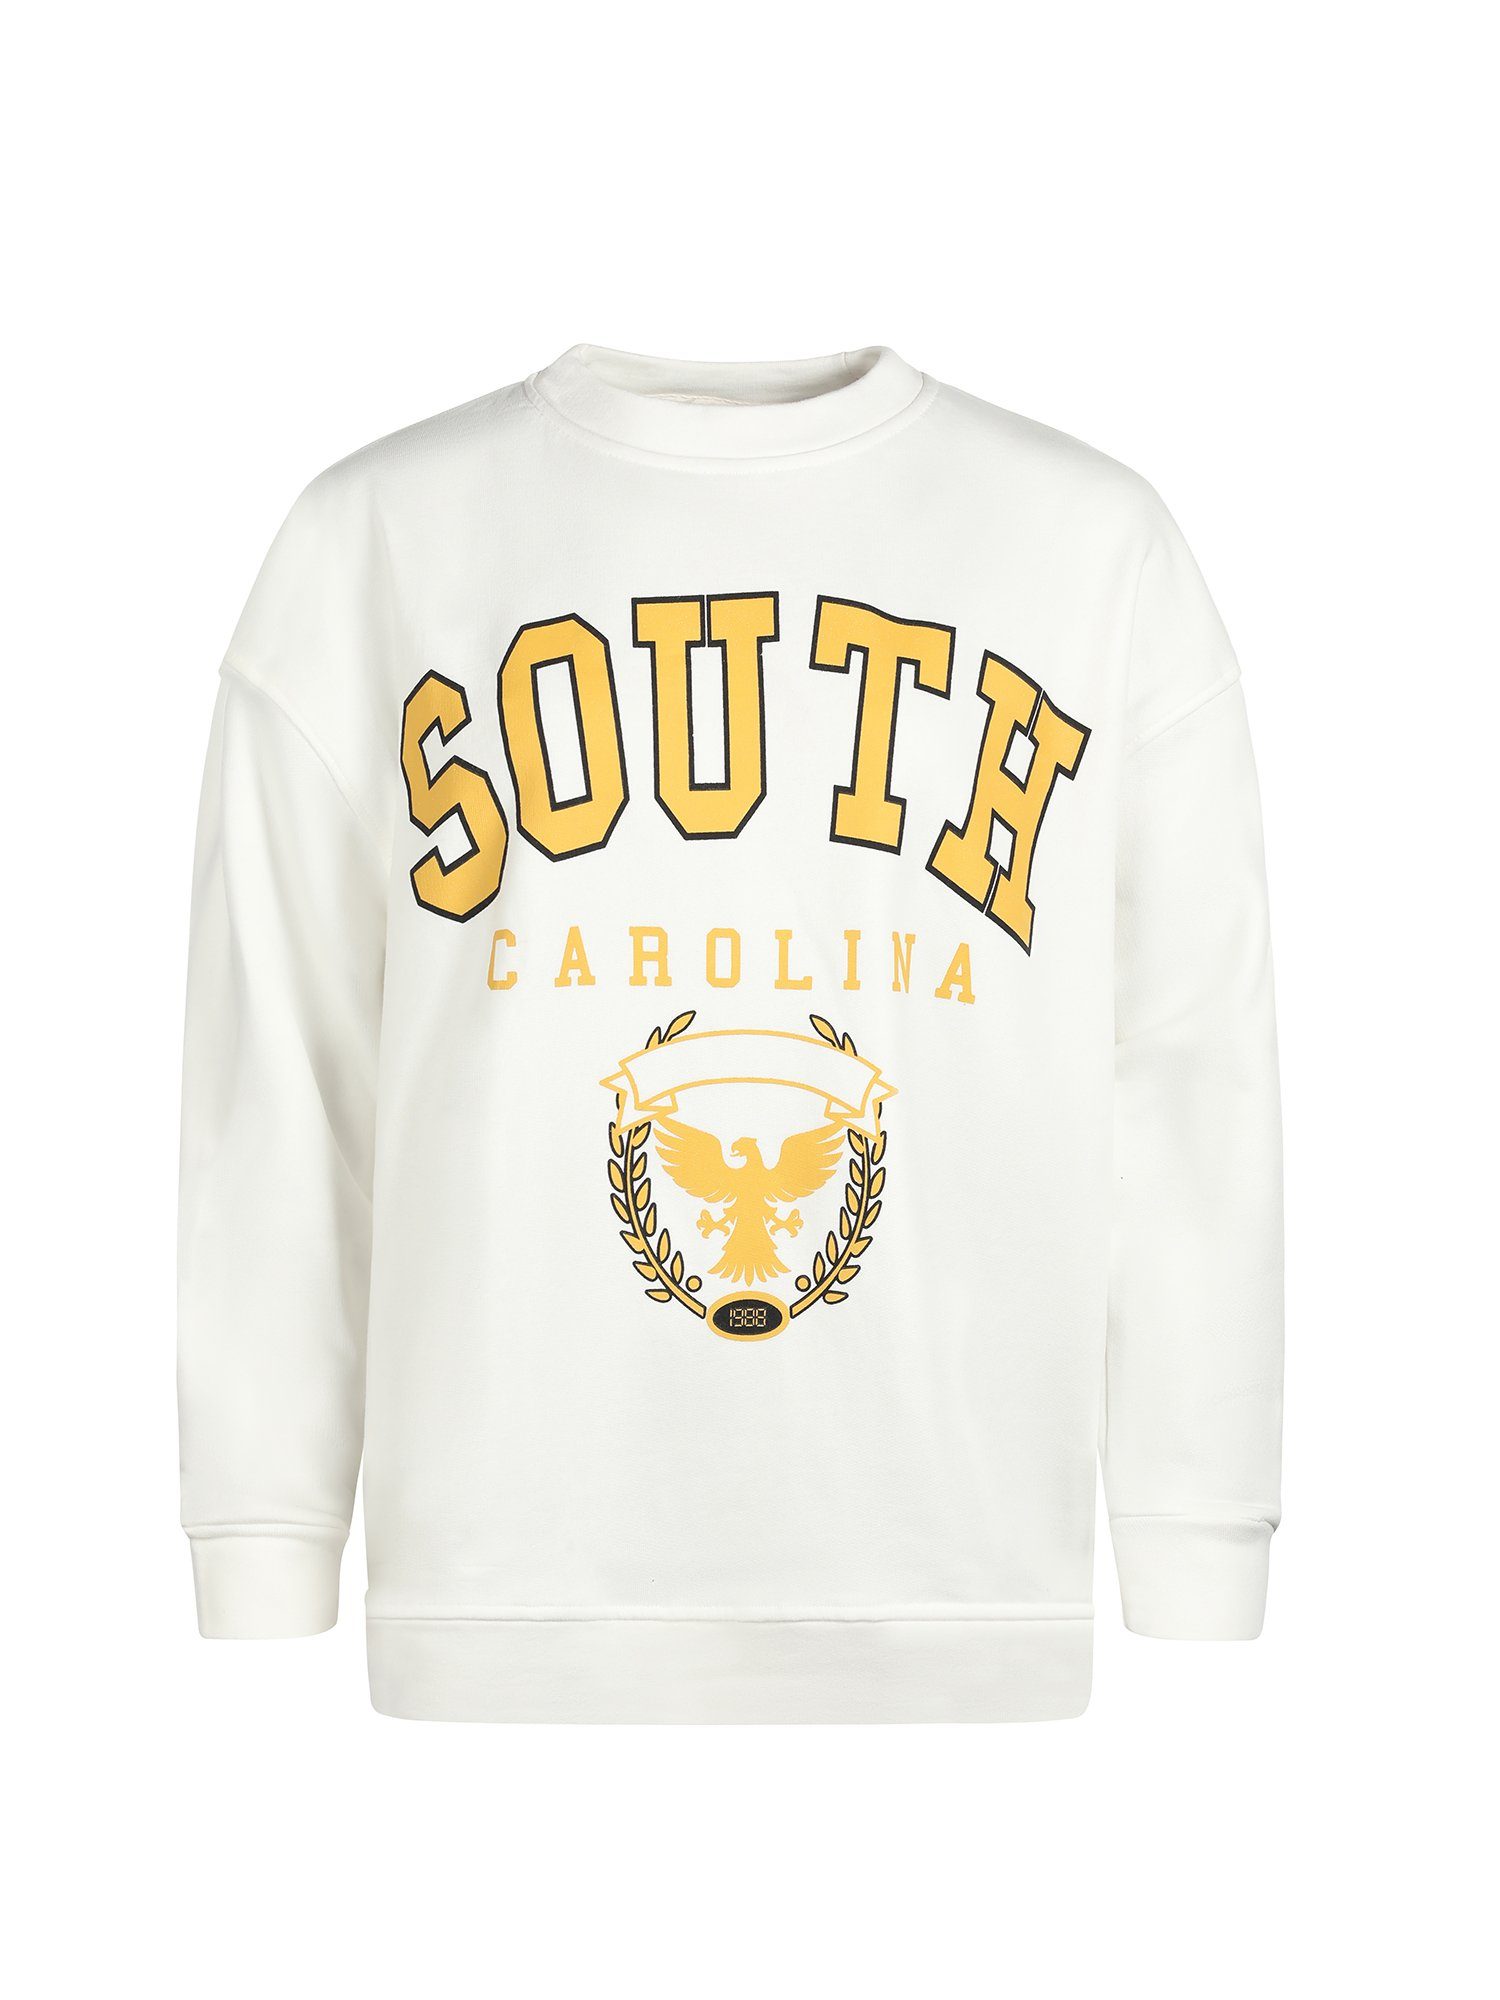 Carolina Freshlions Freshlions Sweater Weiß Chic-Sweatshirt South keine Angabe Ohne,